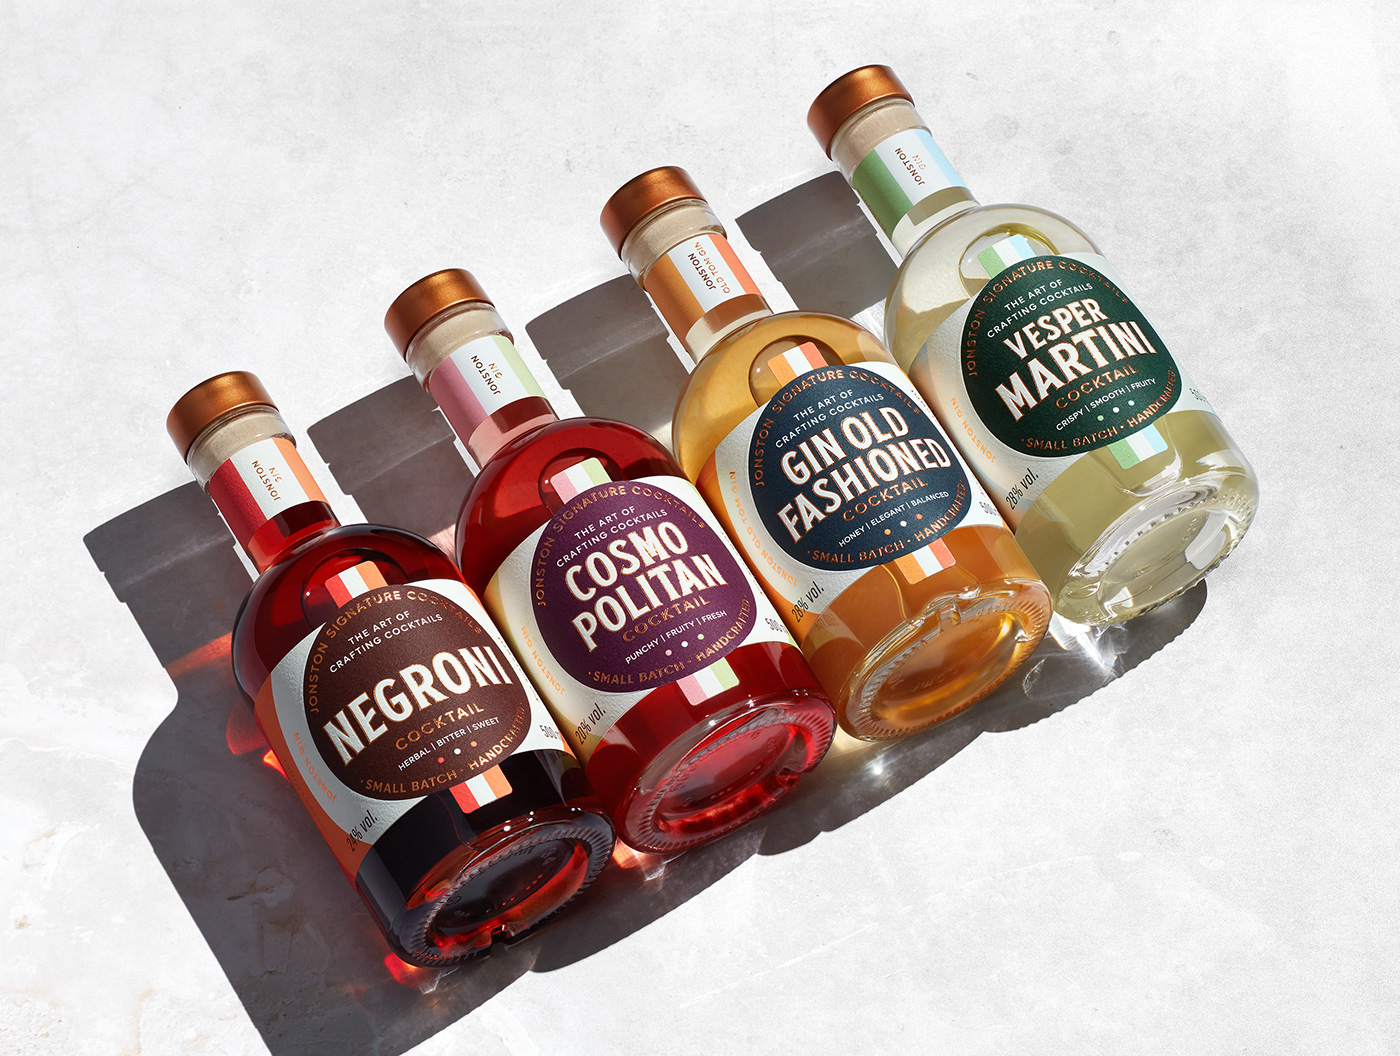 Packaging packaging design cocktail alcohol label design graphic design  branding  typography   design Brand Design